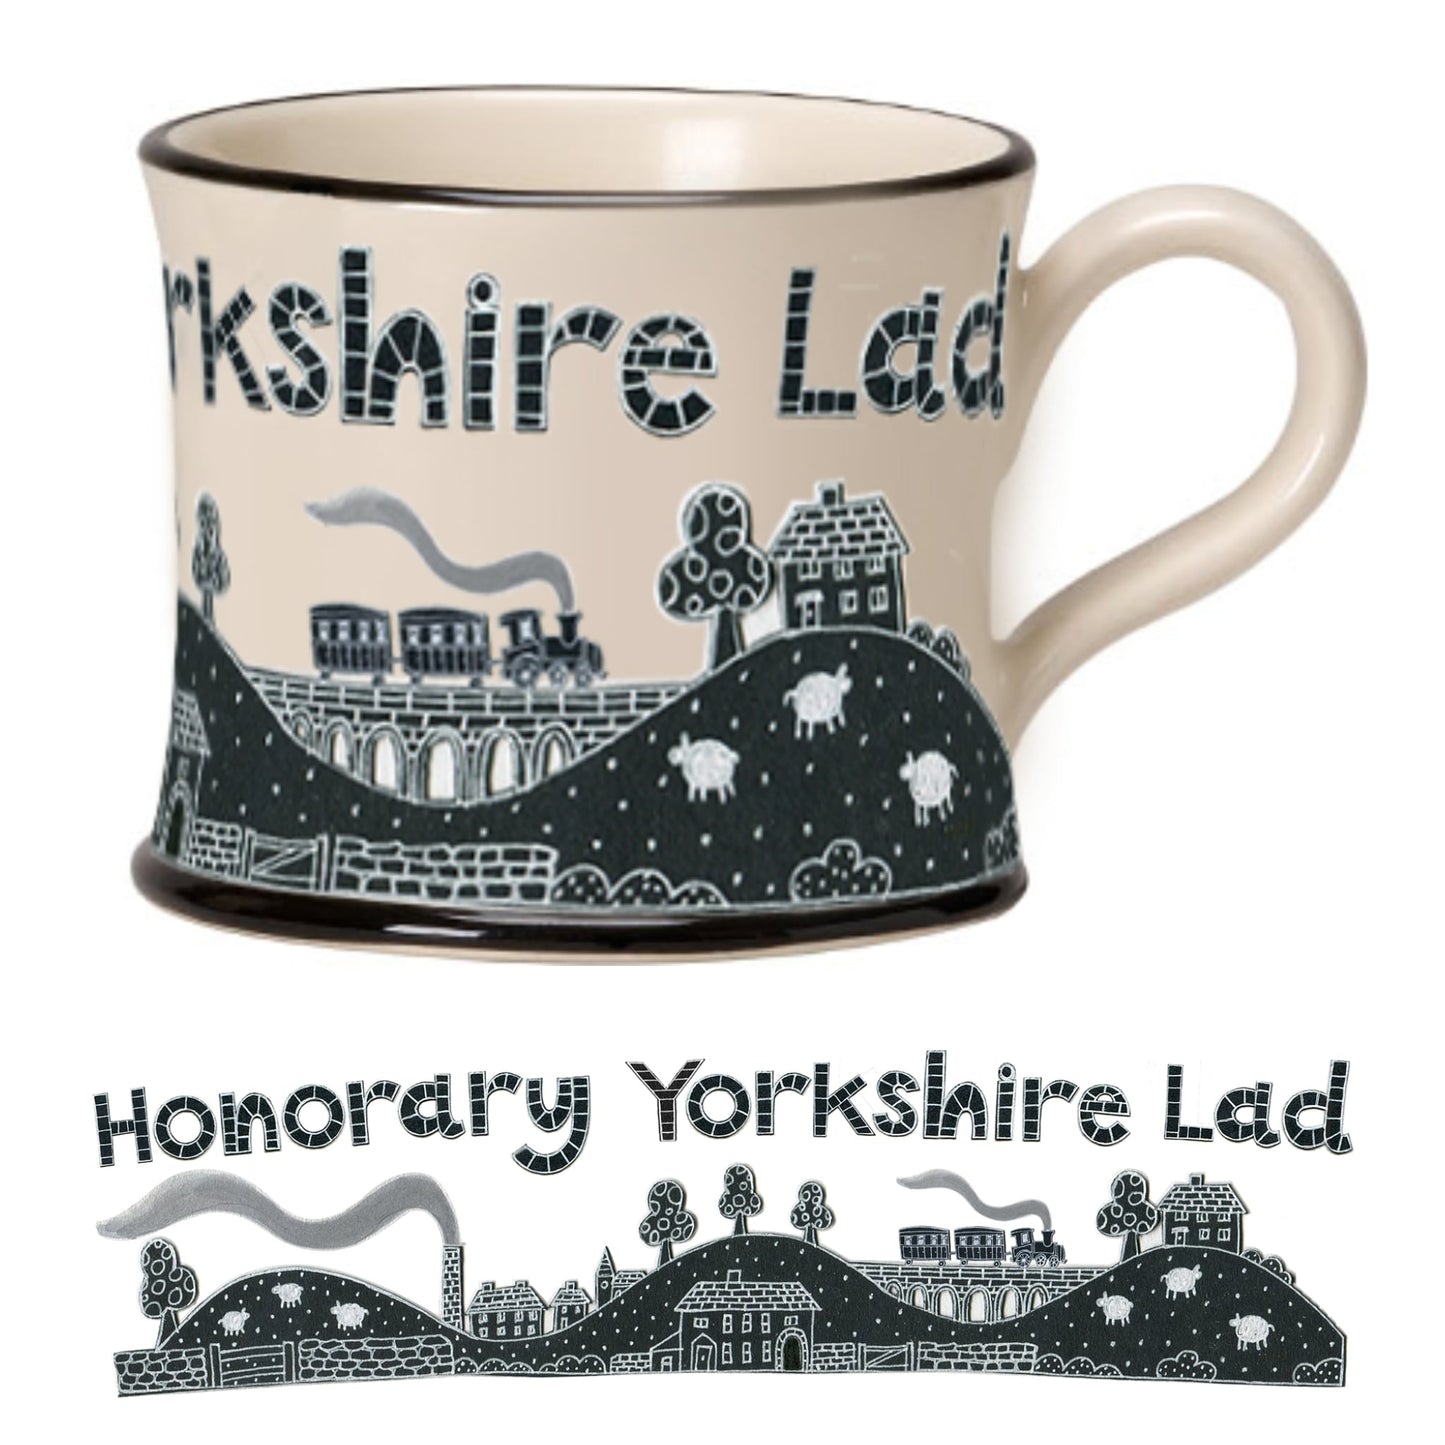 Honorary Yorkshire Lad Mug - The Great Yorkshire Shop